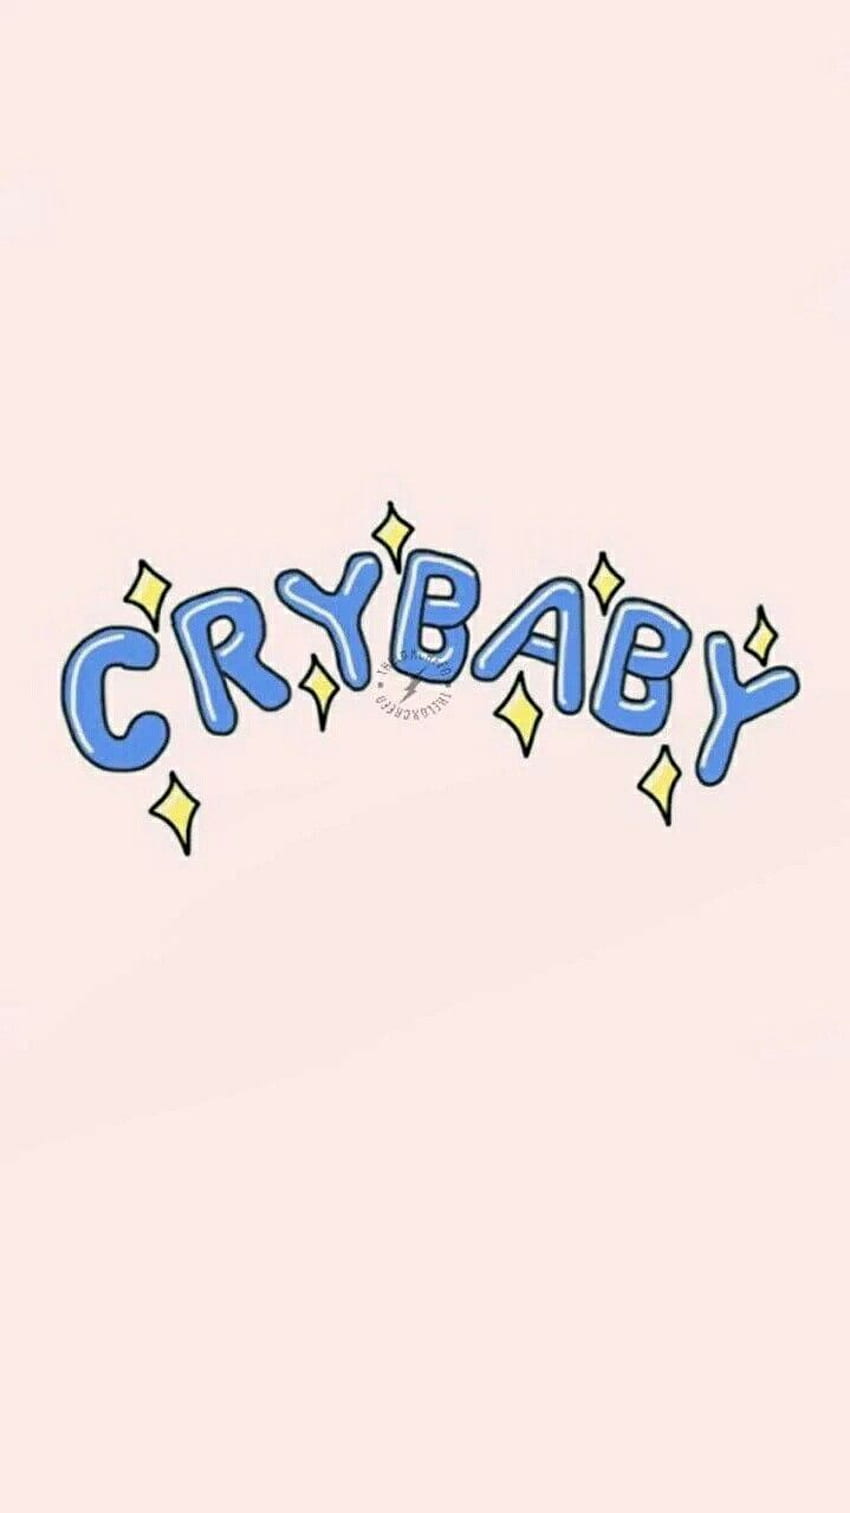 Cry baby by person - Melanie Martinez